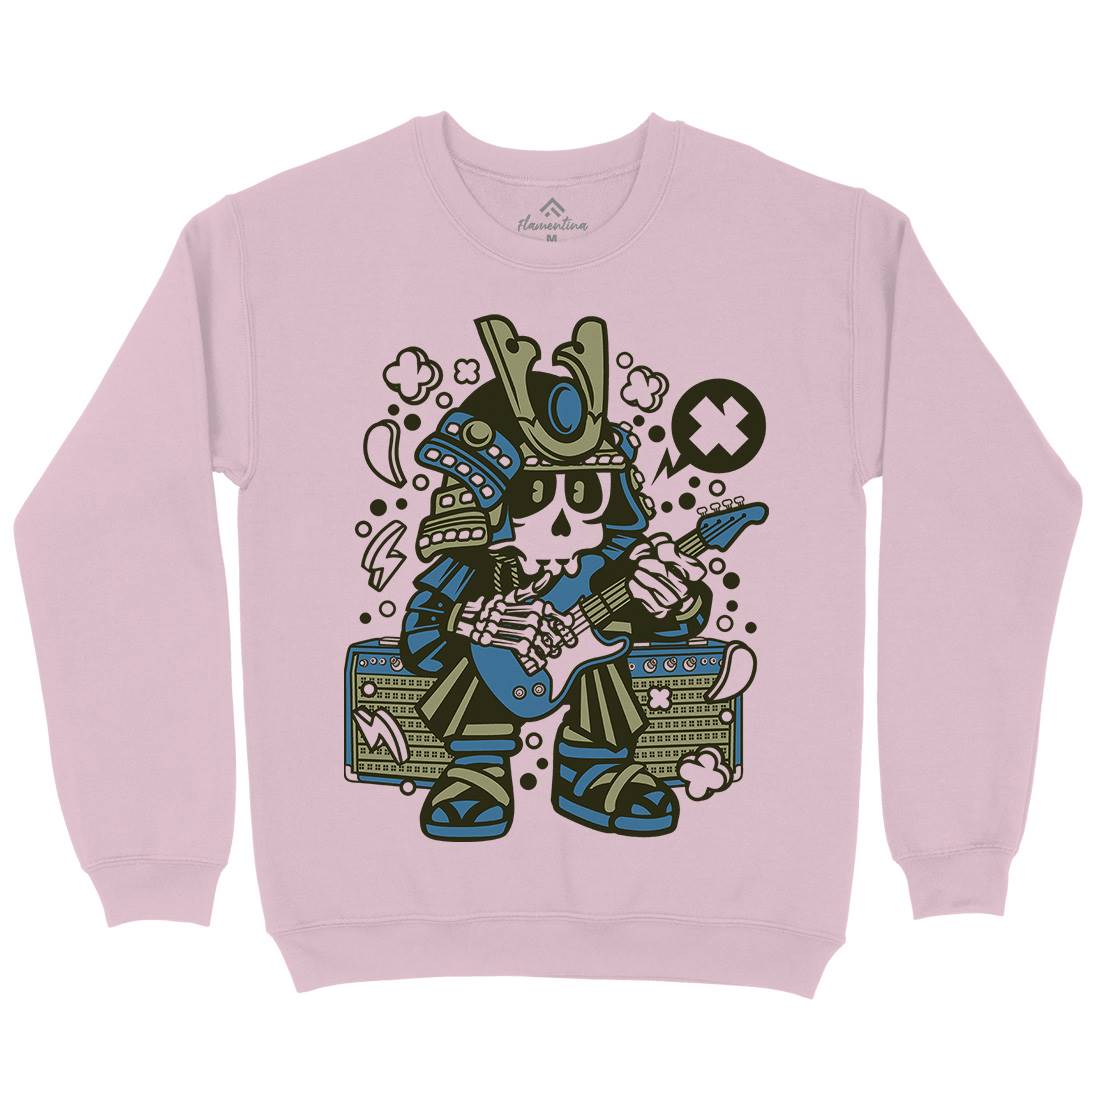 Samurai Rock Star Kids Crew Neck Sweatshirt Music C218